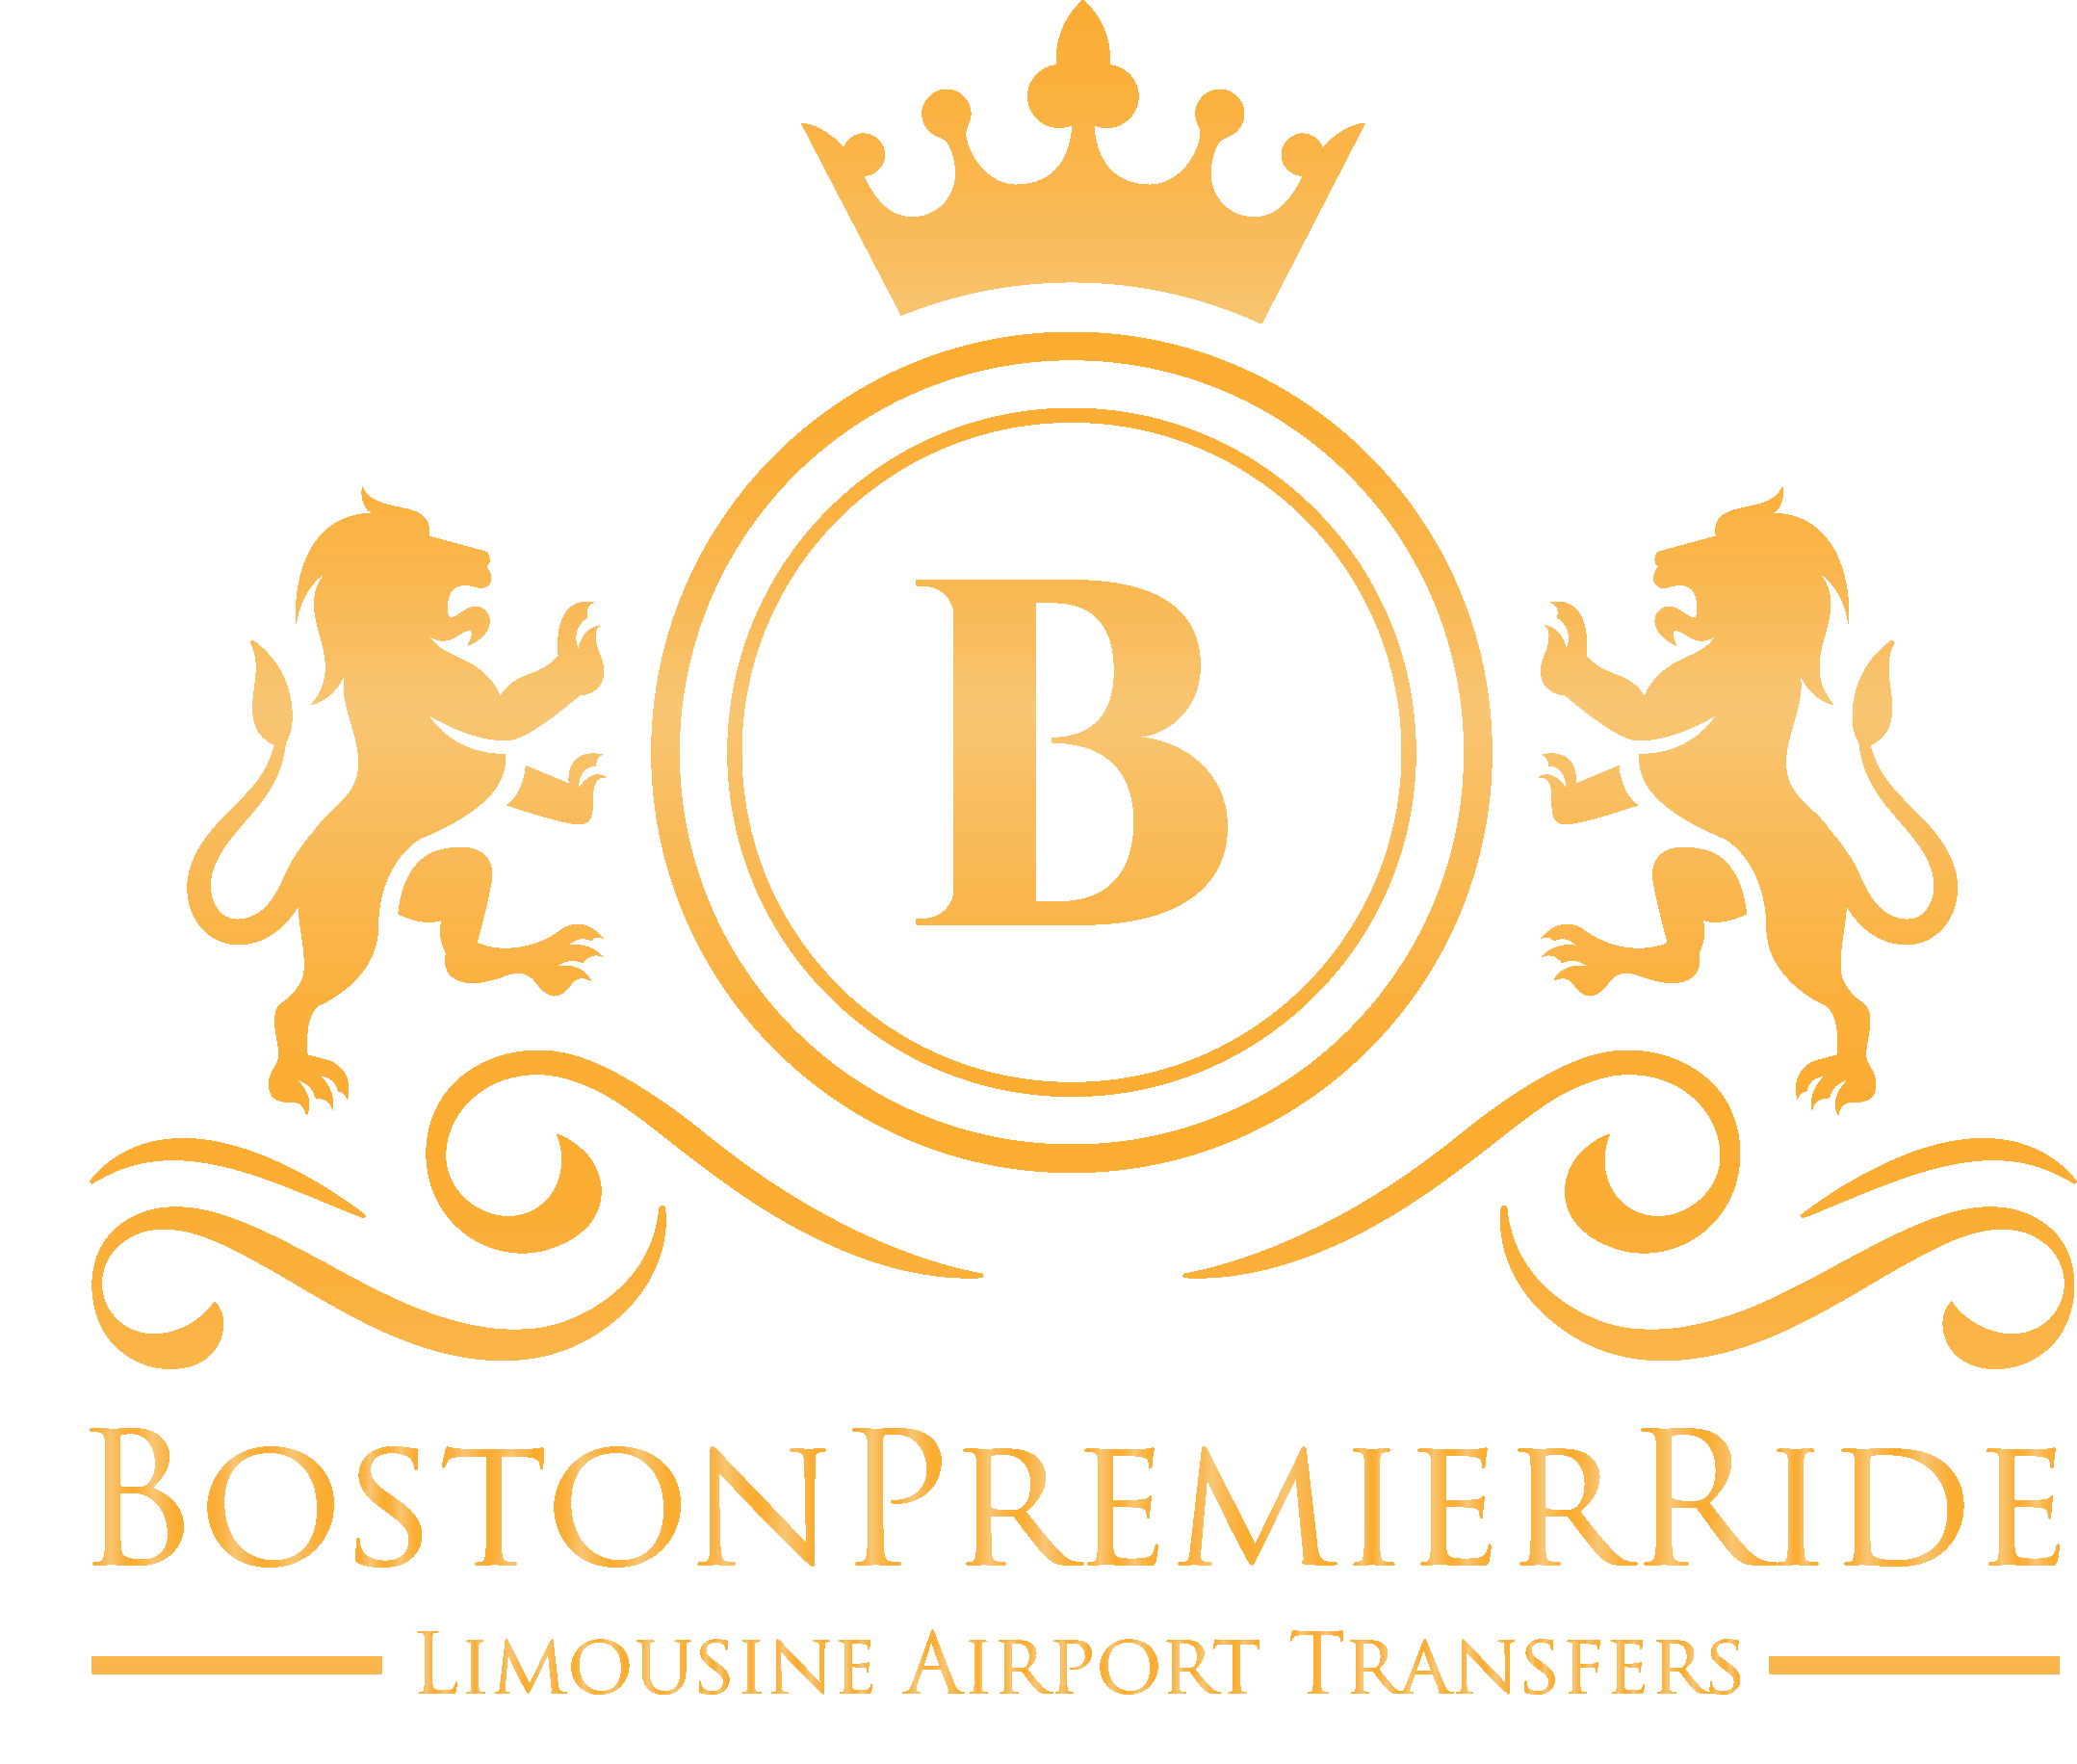 Boston Premier Ride